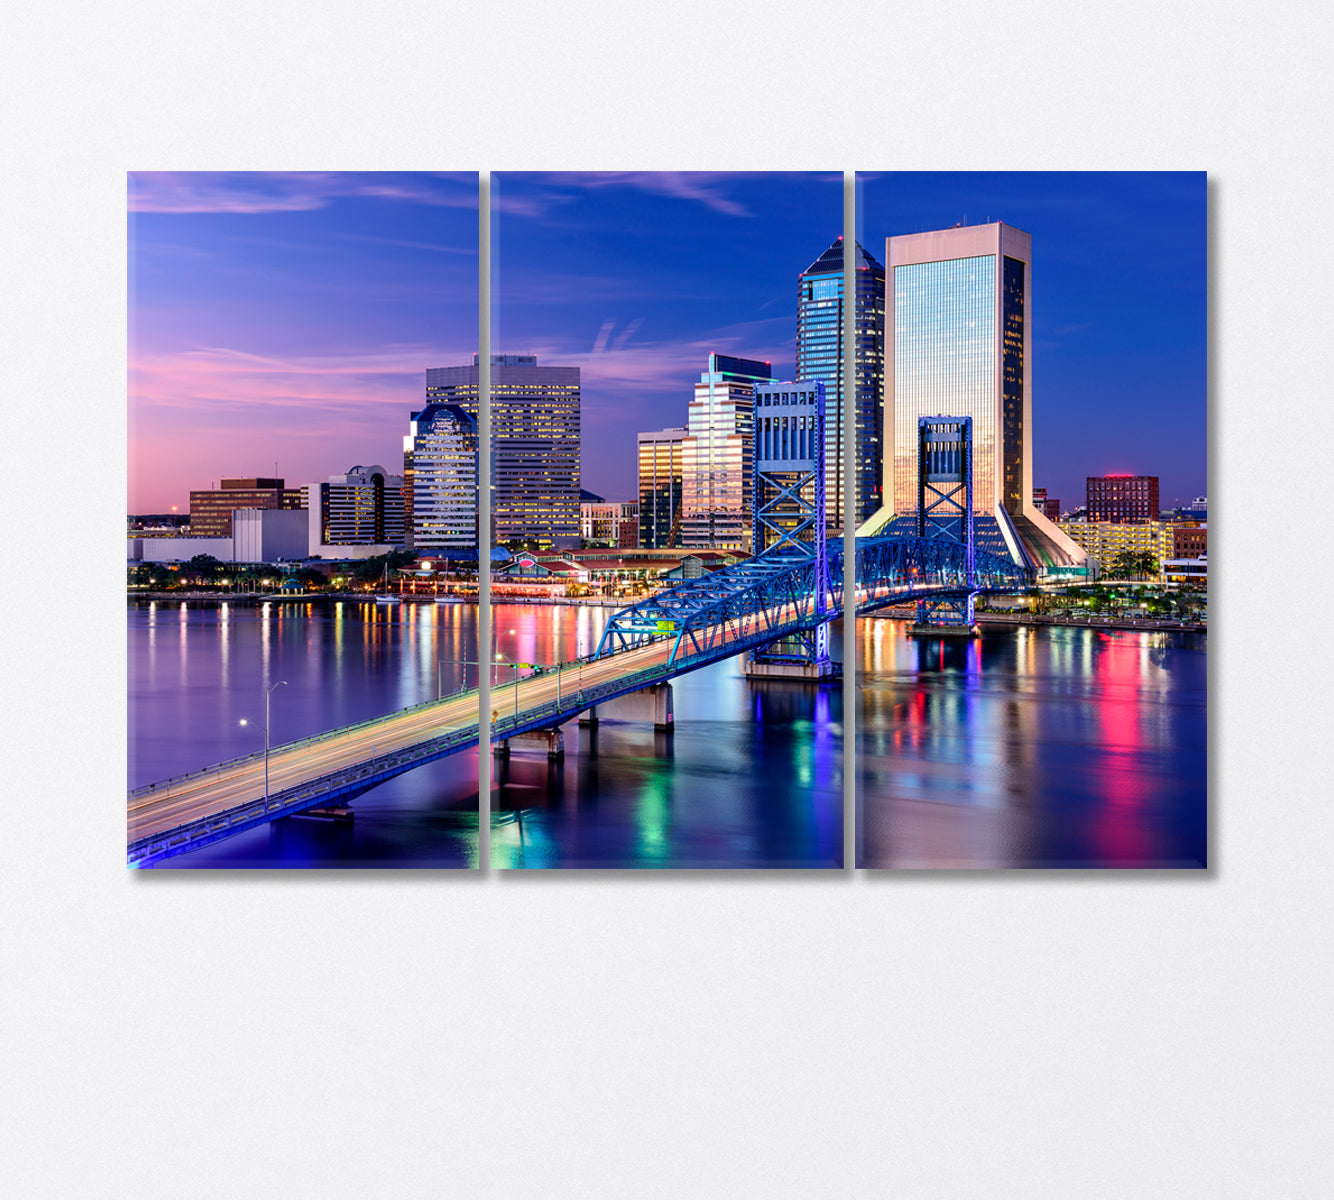 Сity Jacksonville near the St Johns River Canvas Print-Canvas Print-CetArt-3 Panels-36x24 inches-CetArt